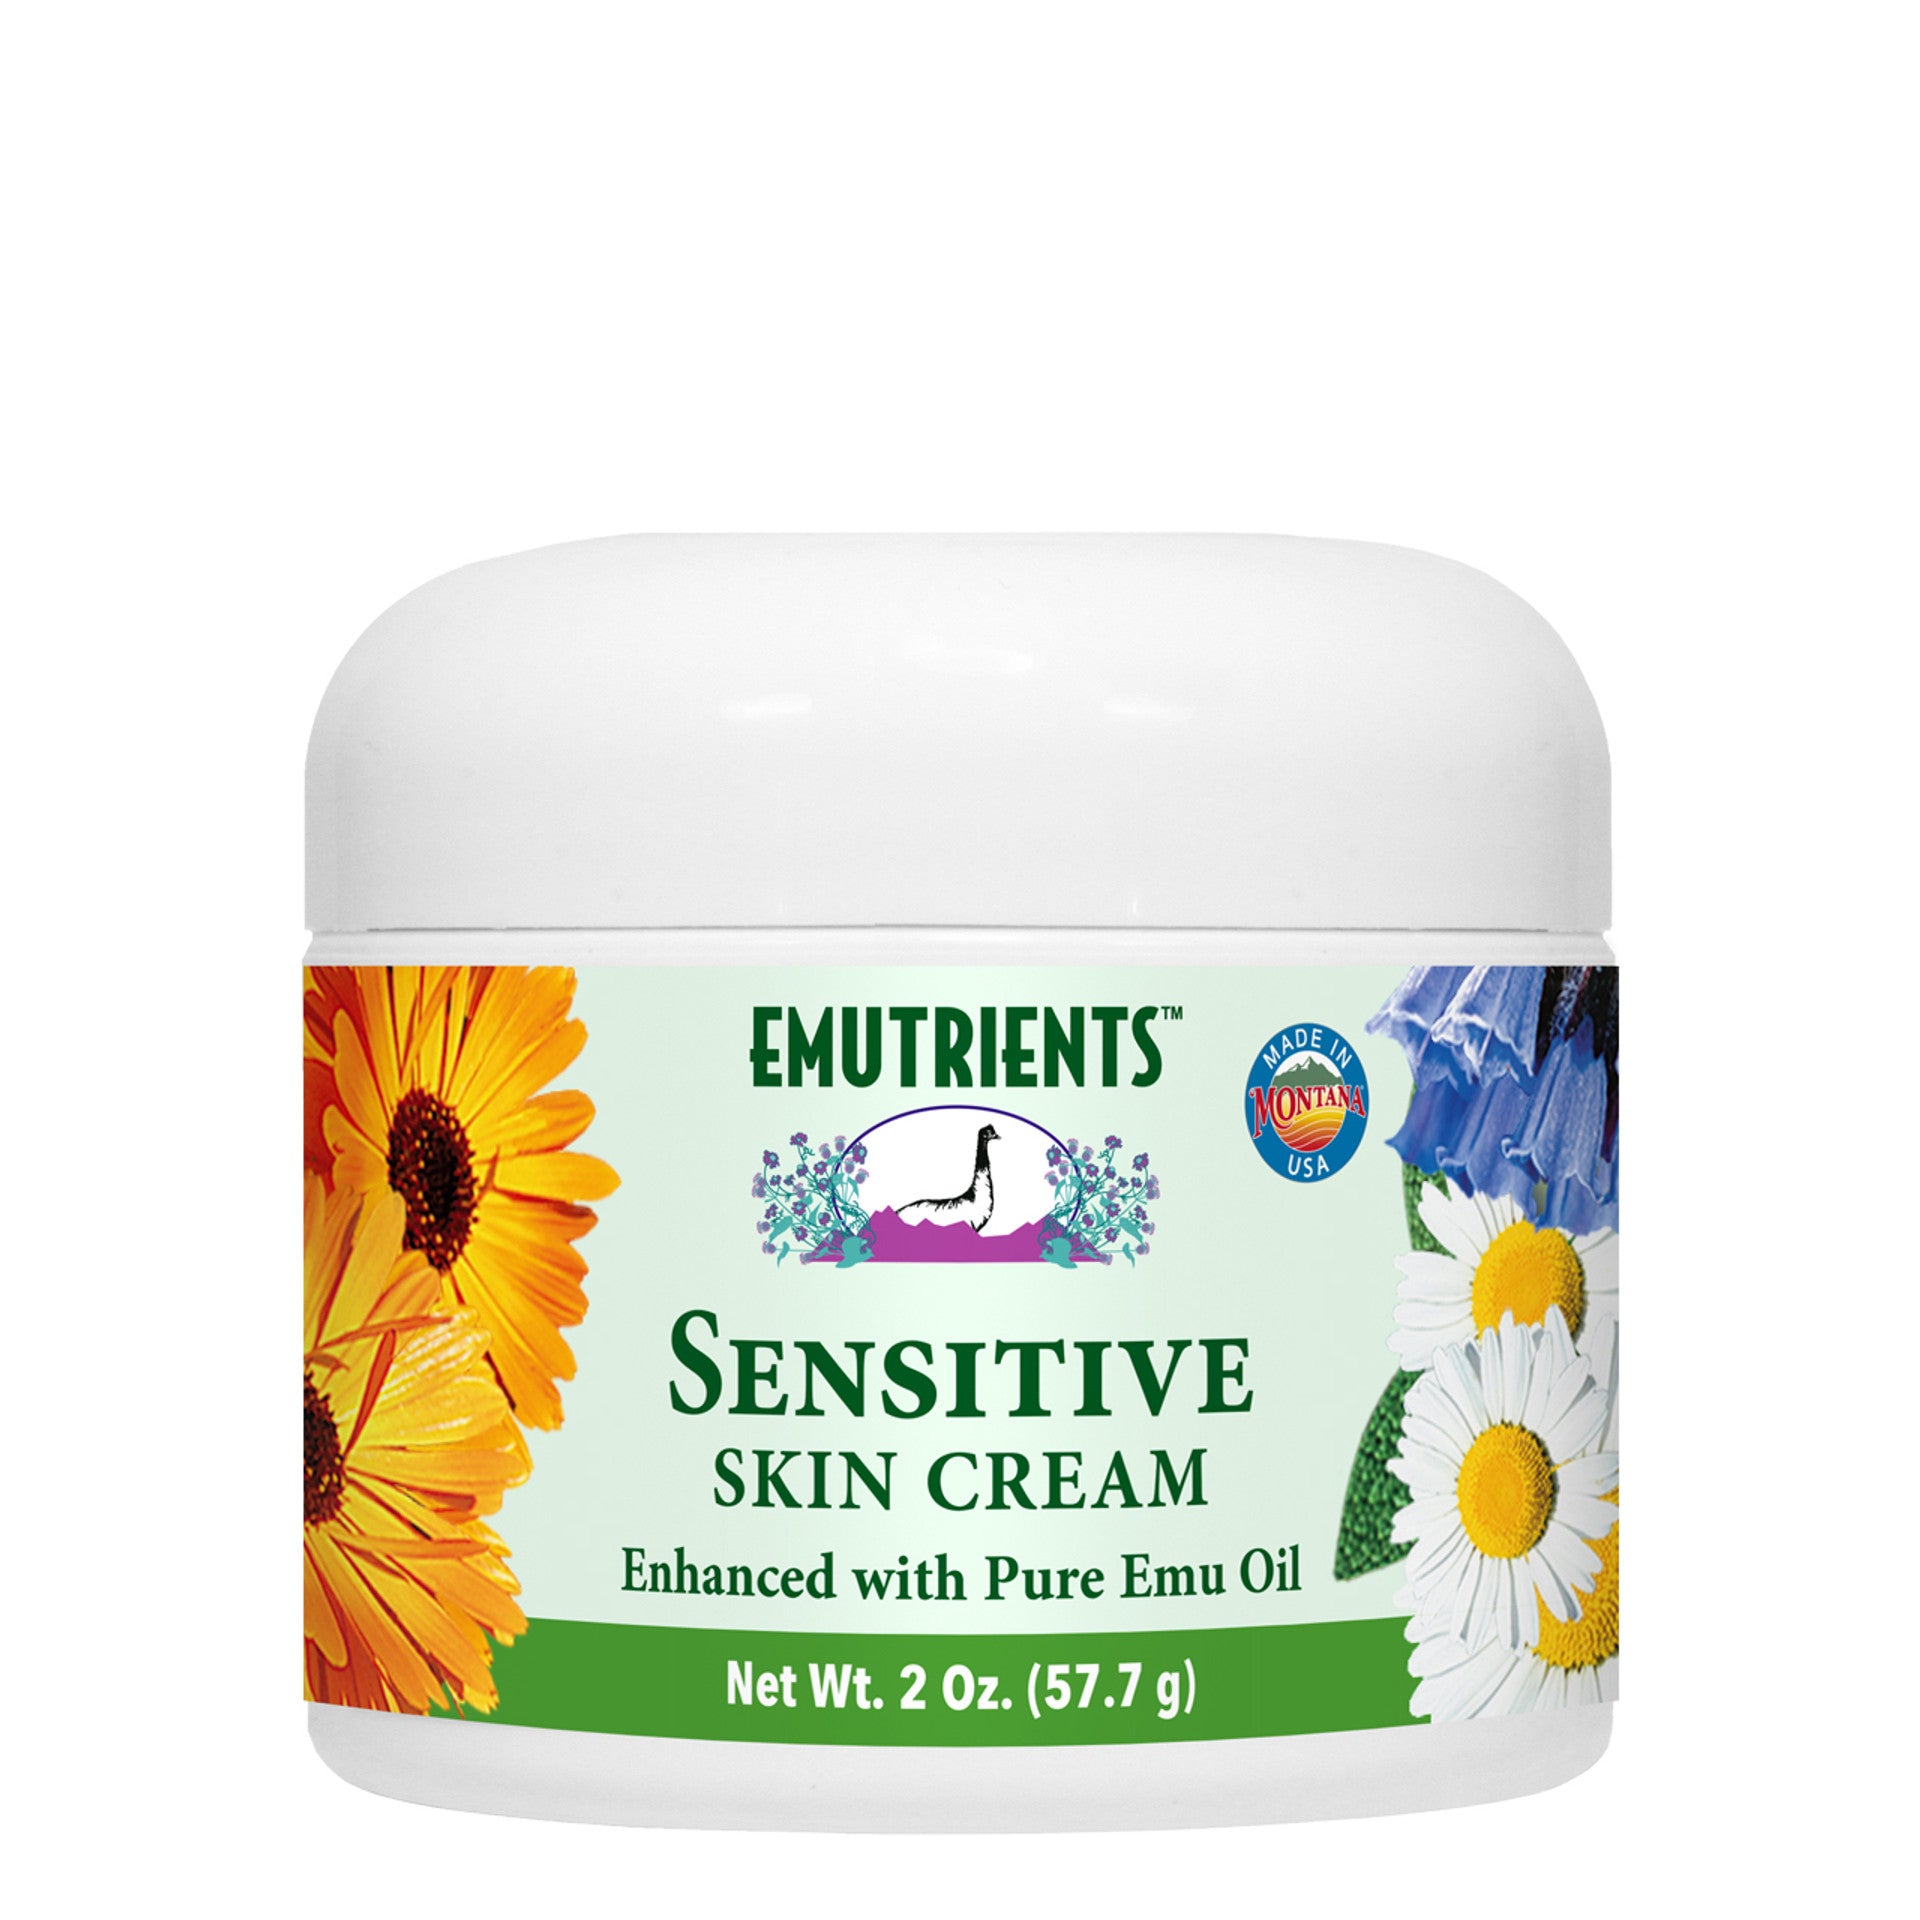 EMUTRIENTS™ Sensitive Skin Cream